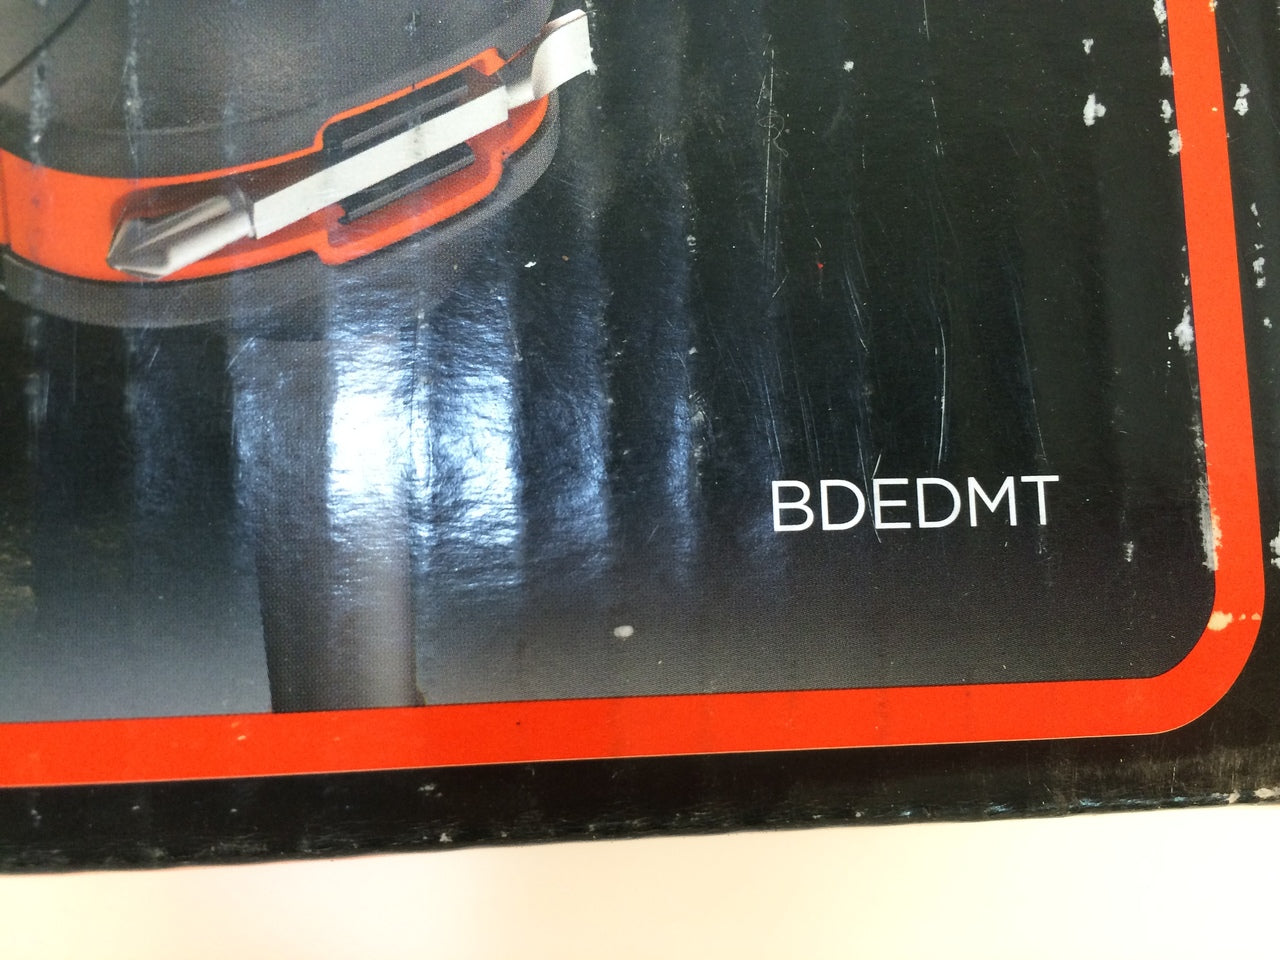 Black+Decker BDEDMT Matrix 4 Amp 3/8 in. Corded Drill and Driver